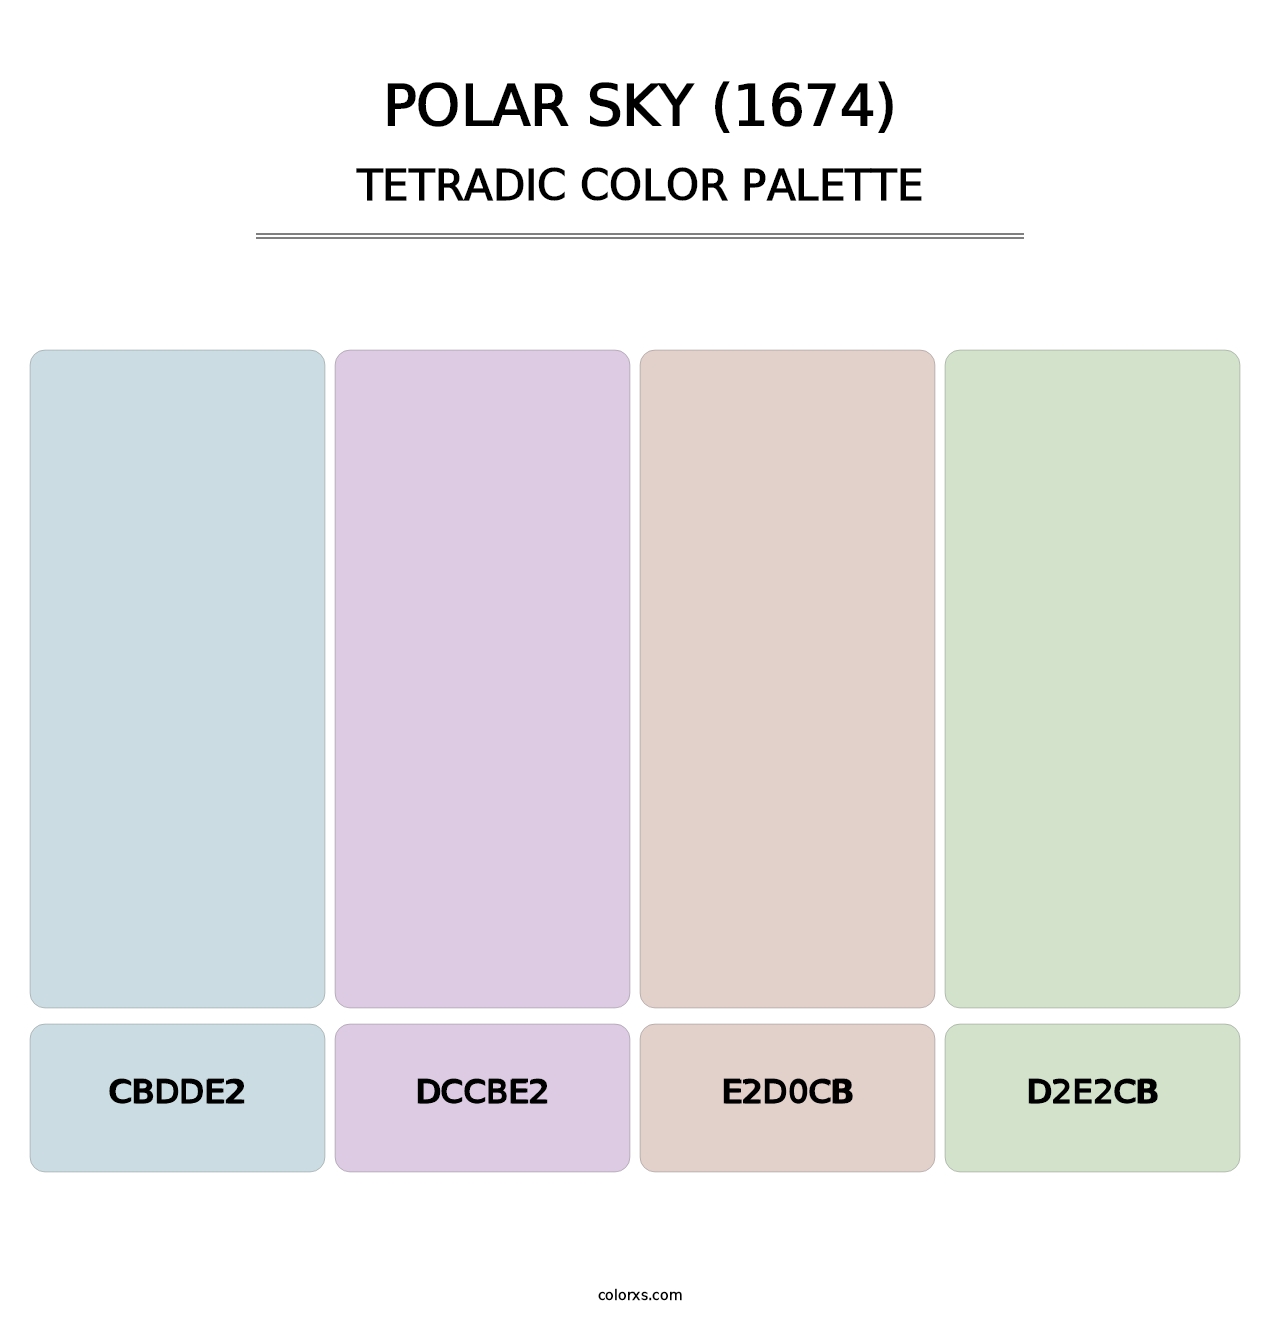 Polar Sky (1674) - Tetradic Color Palette